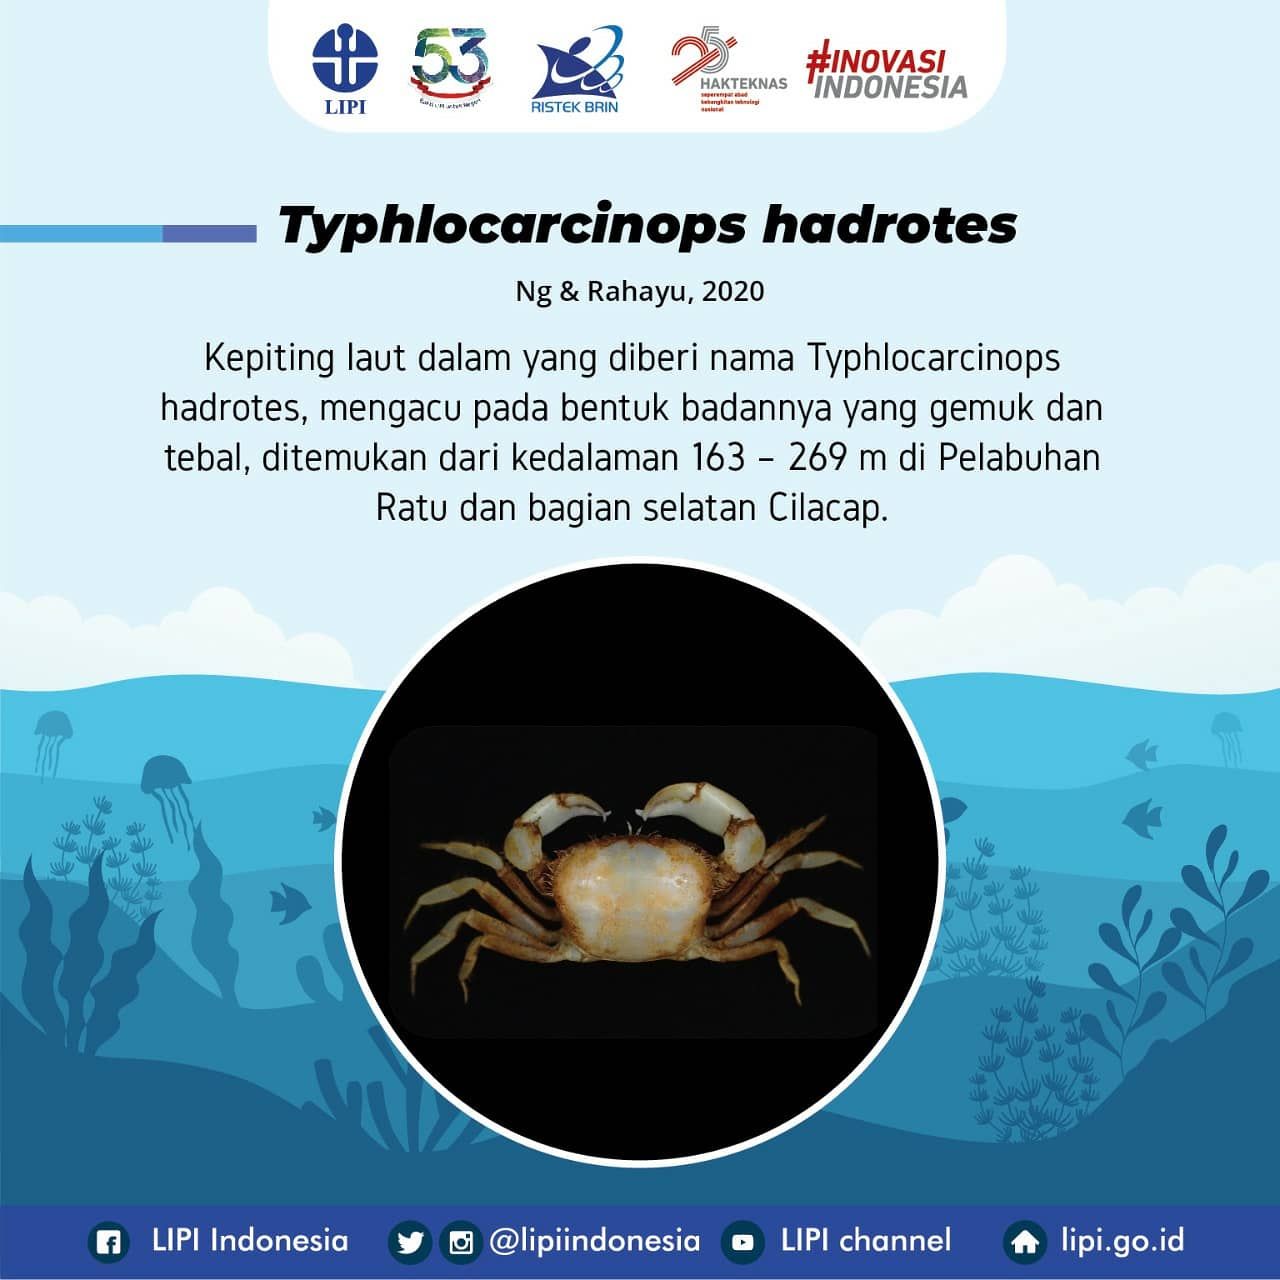 Typhlocarcinops hadrotes,